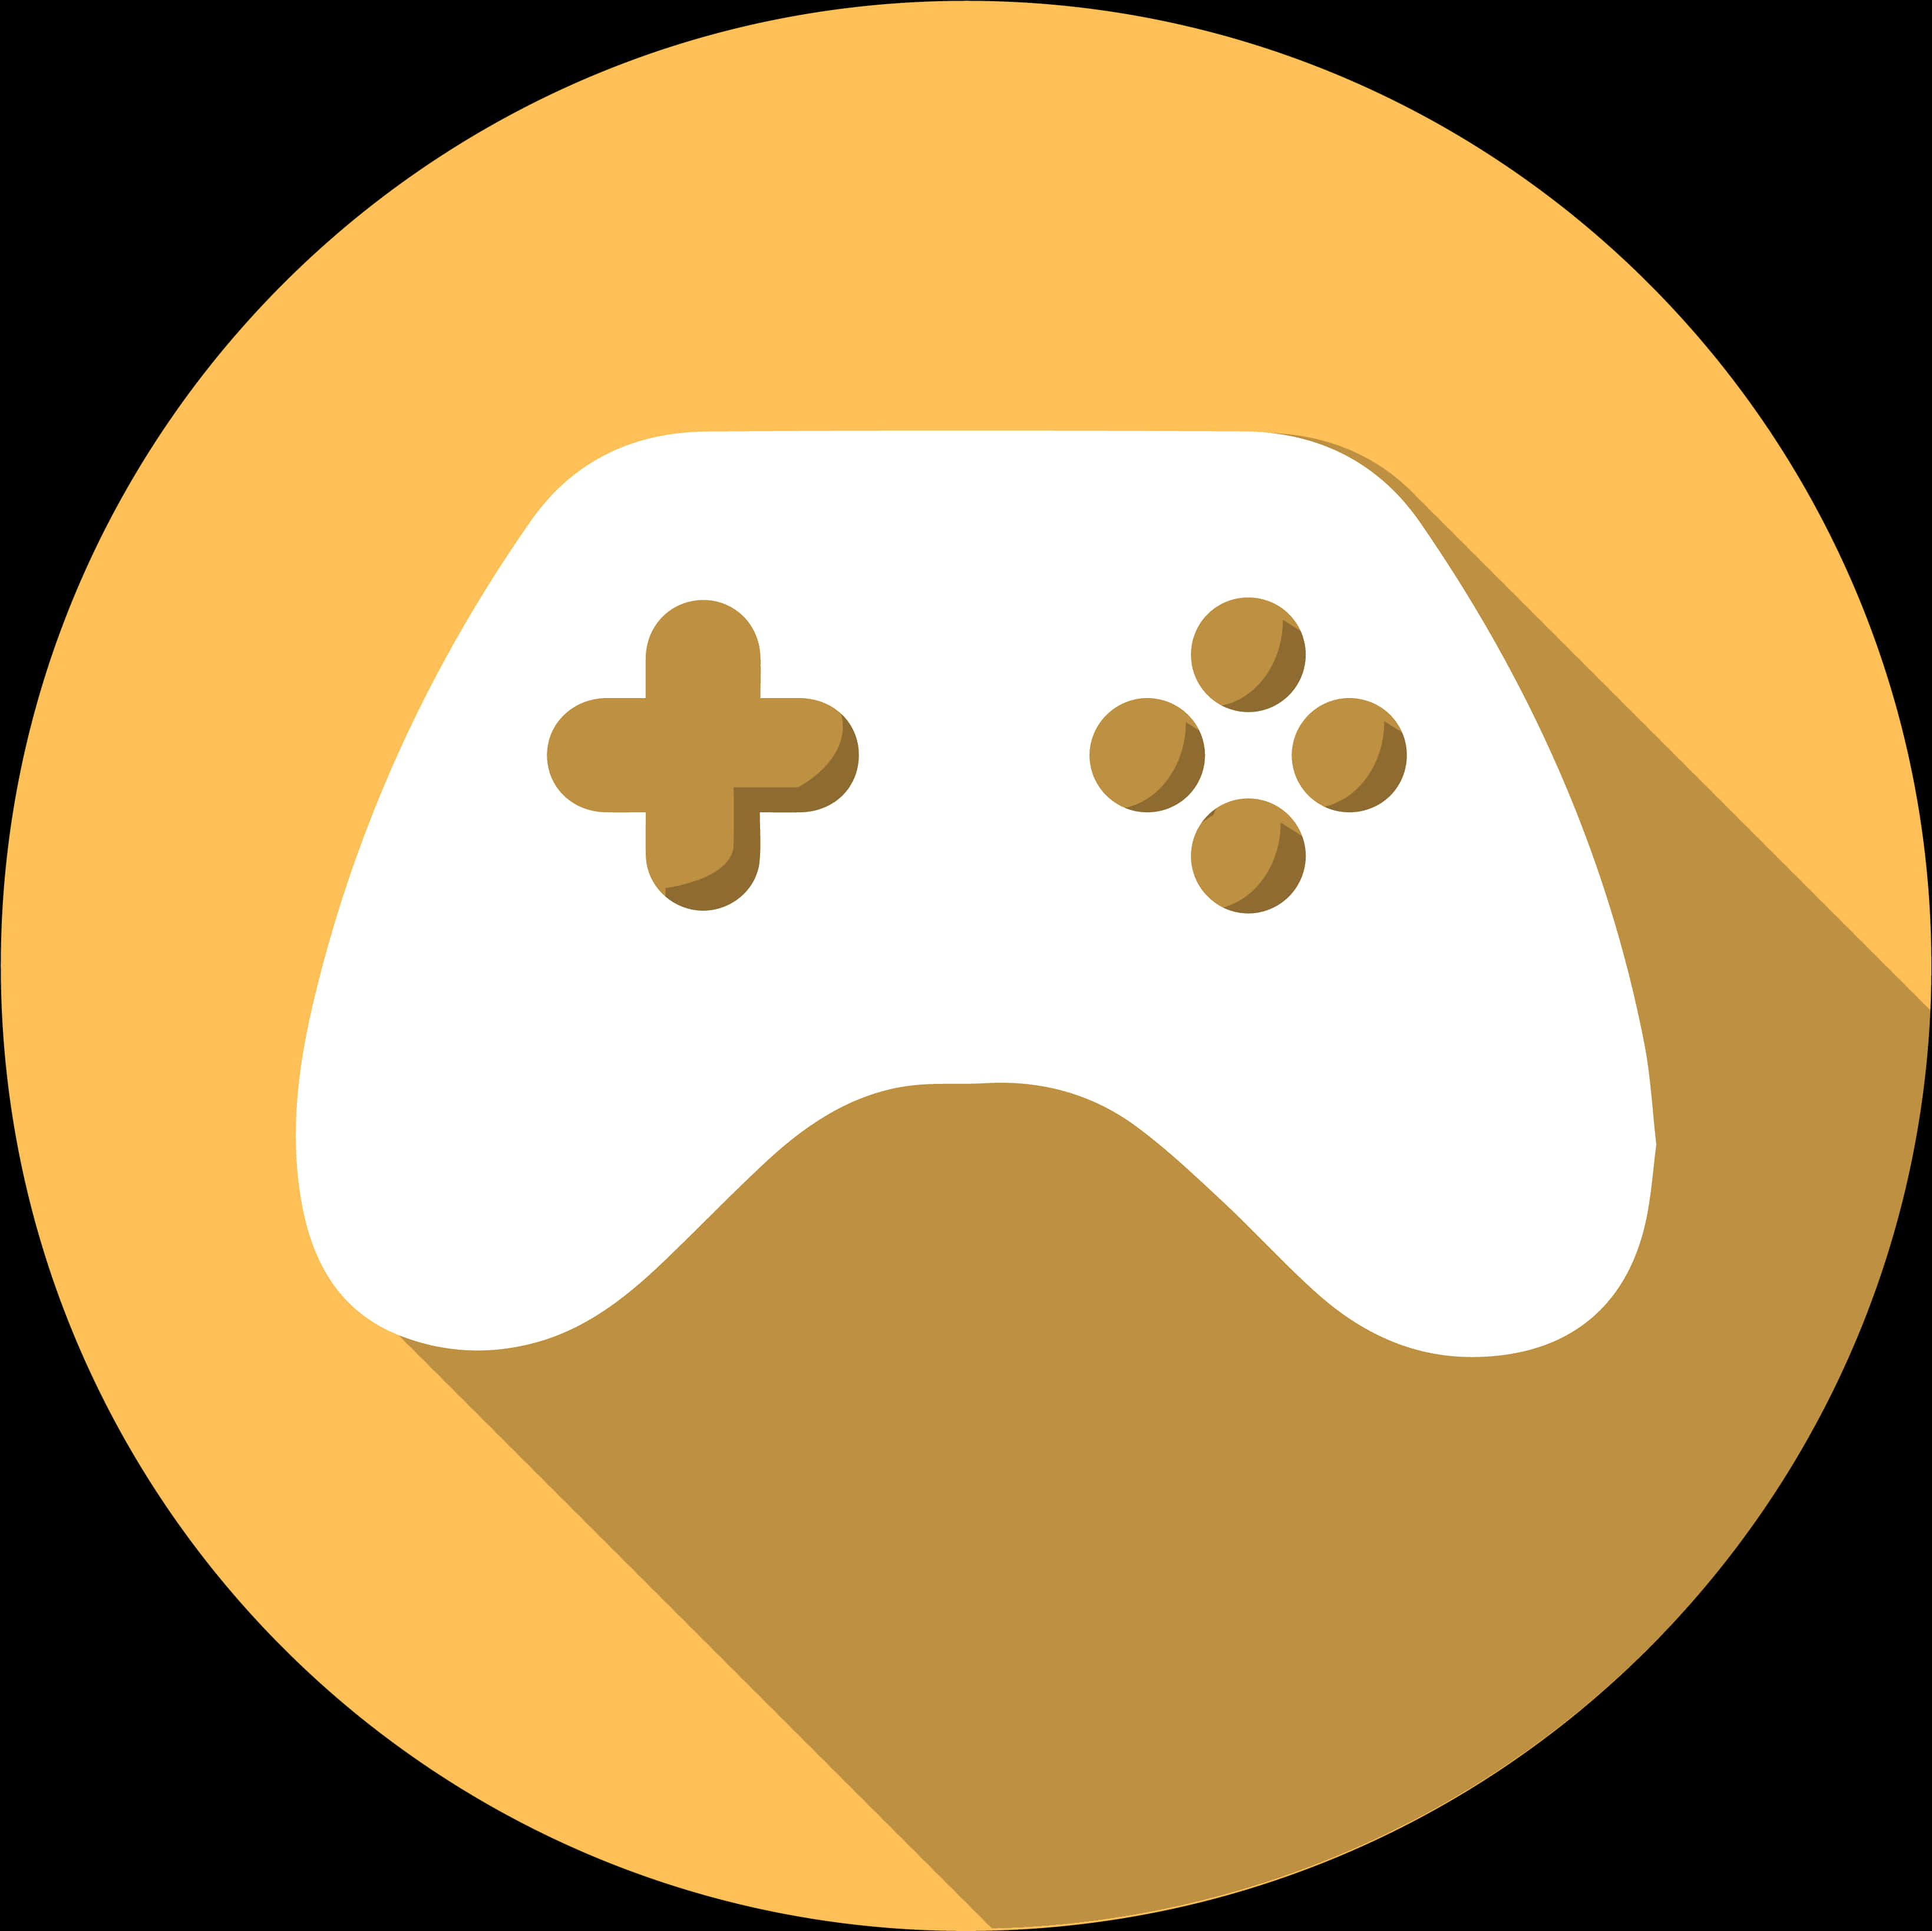 Flat Design Game Controller Icon